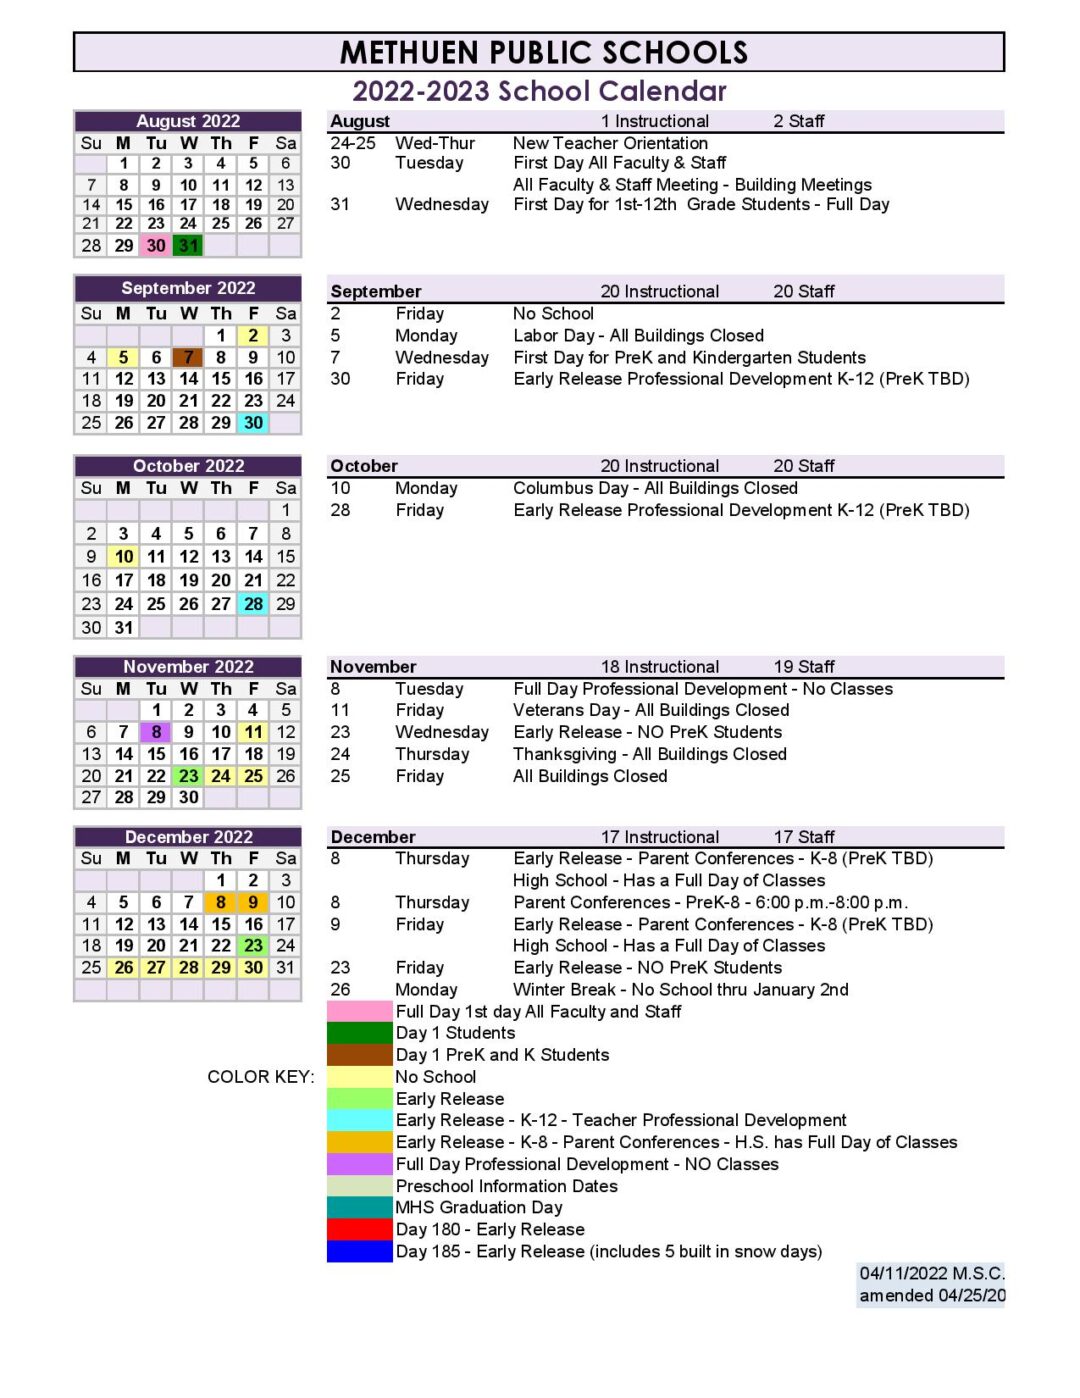 Methuen Public Schools Calendar 2022 2023 (Academic Session)